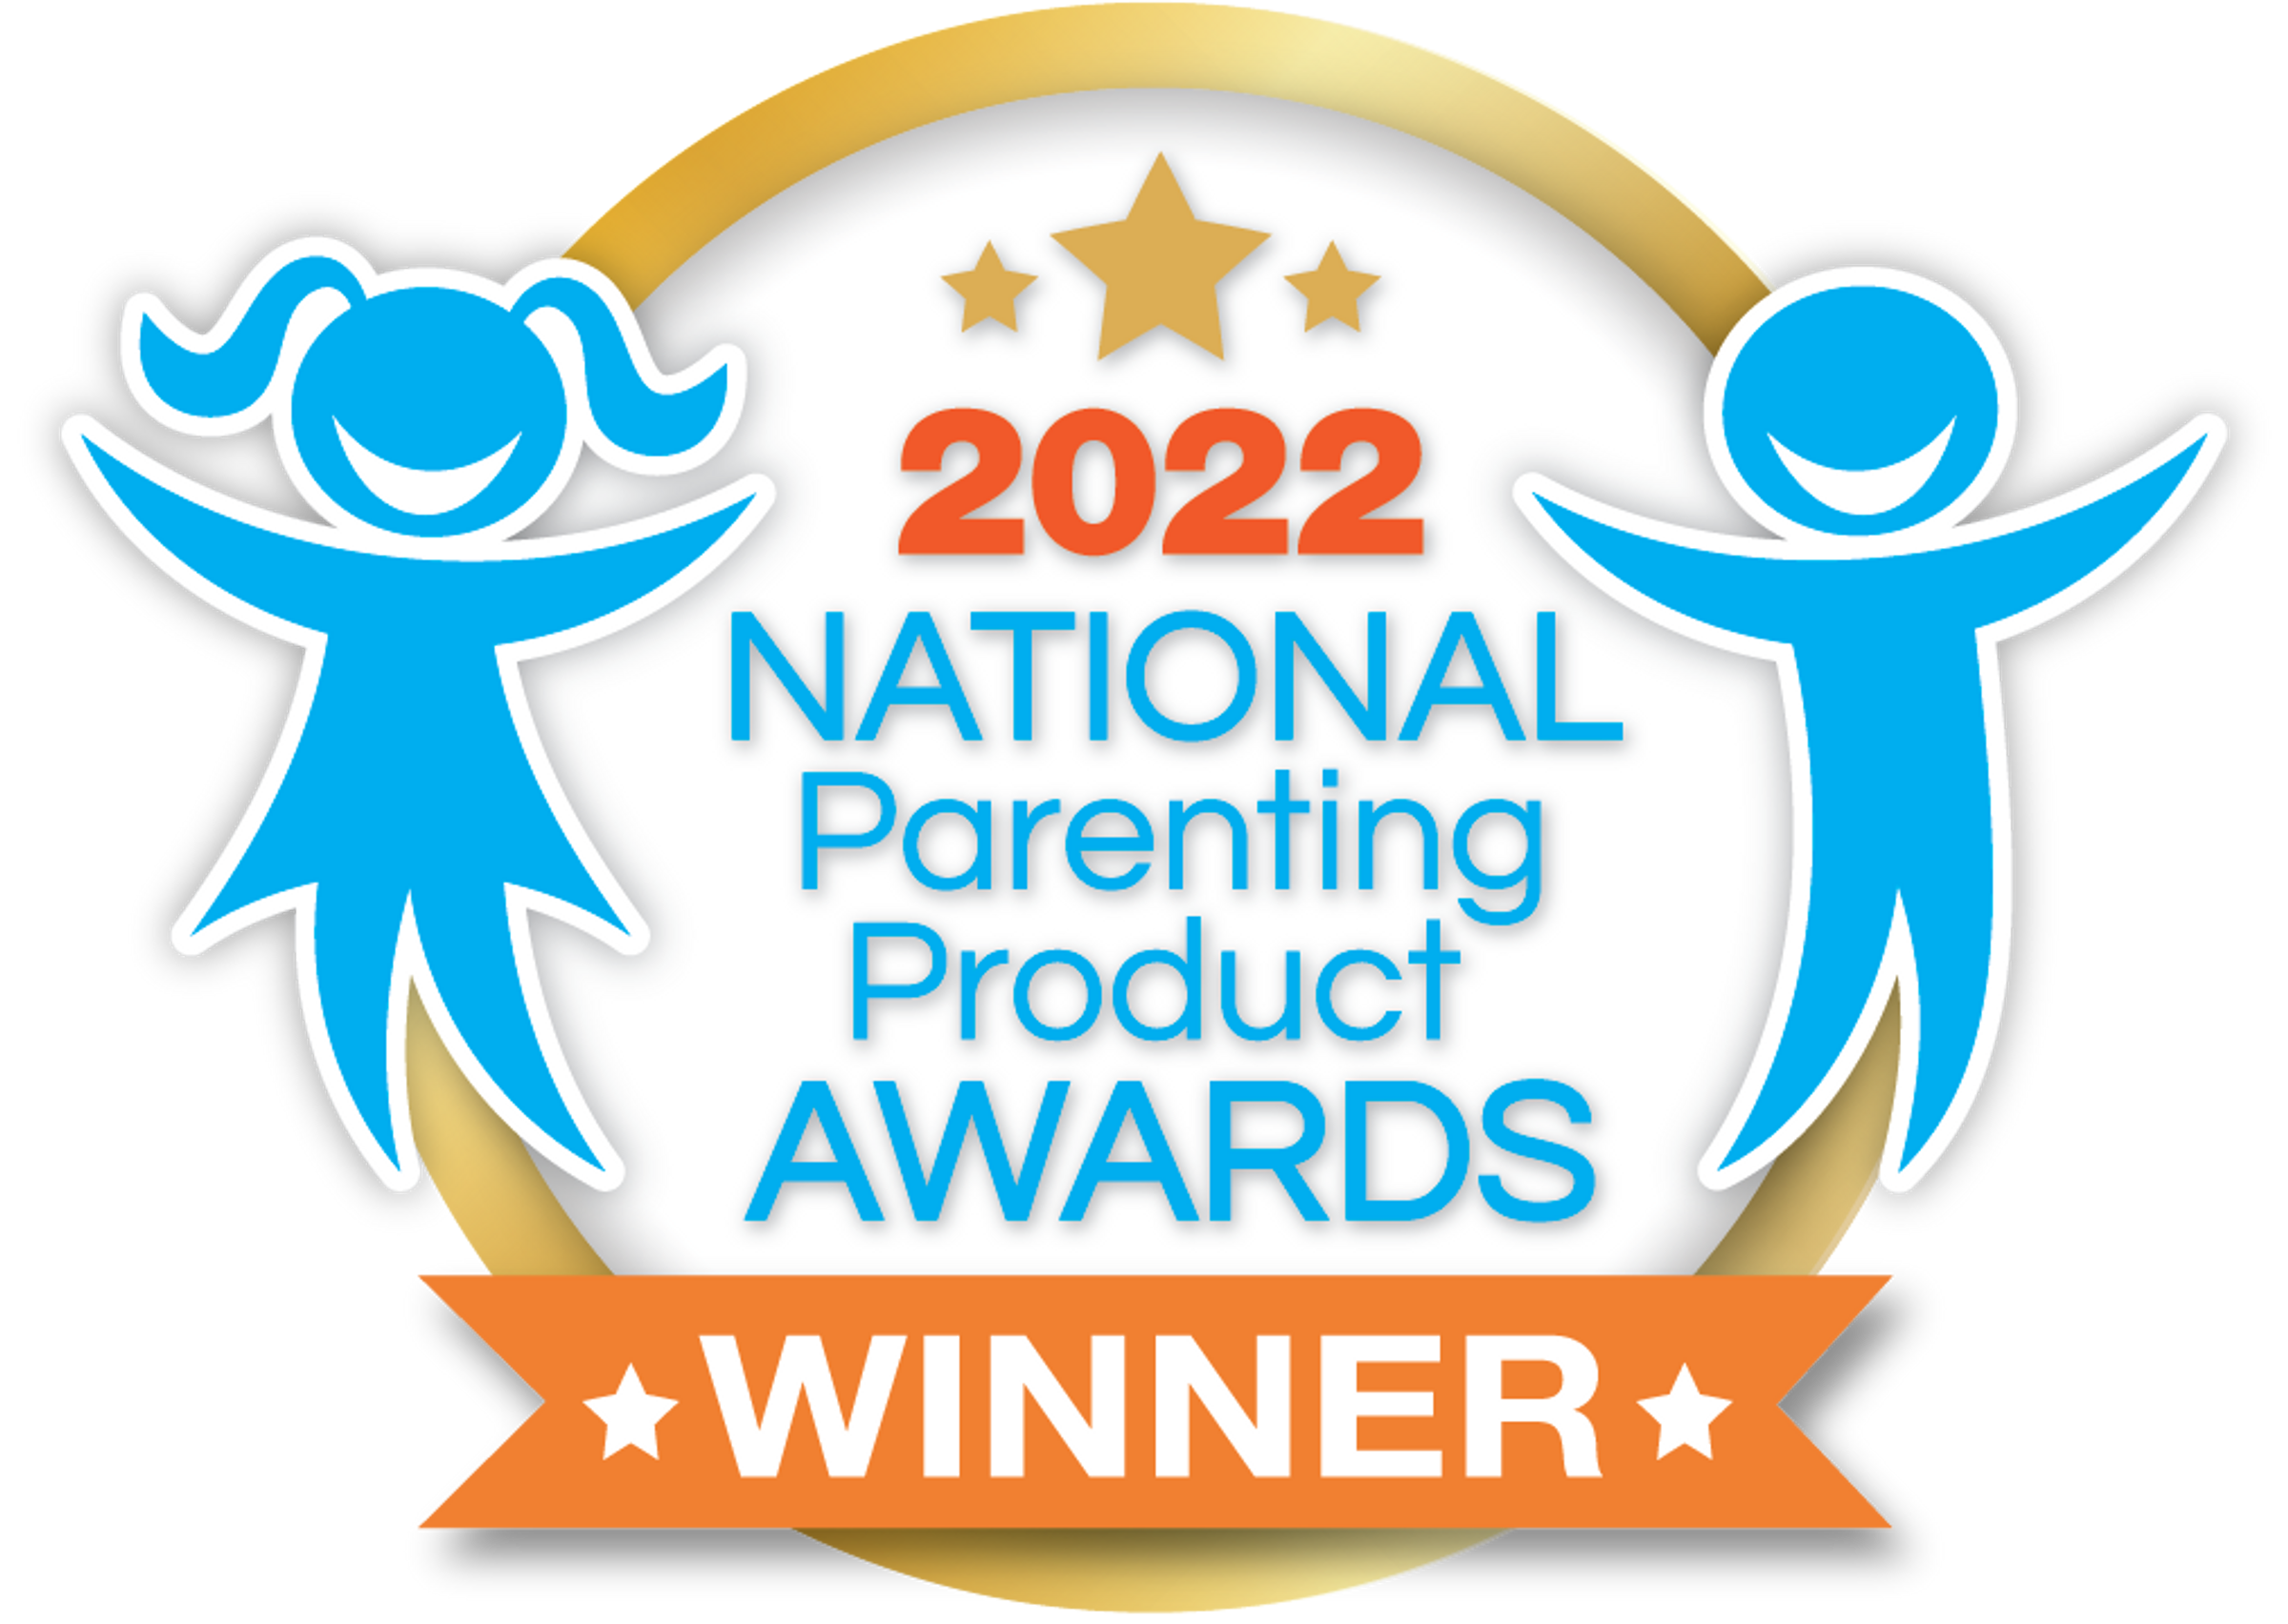 National Parenting Product Award 2022